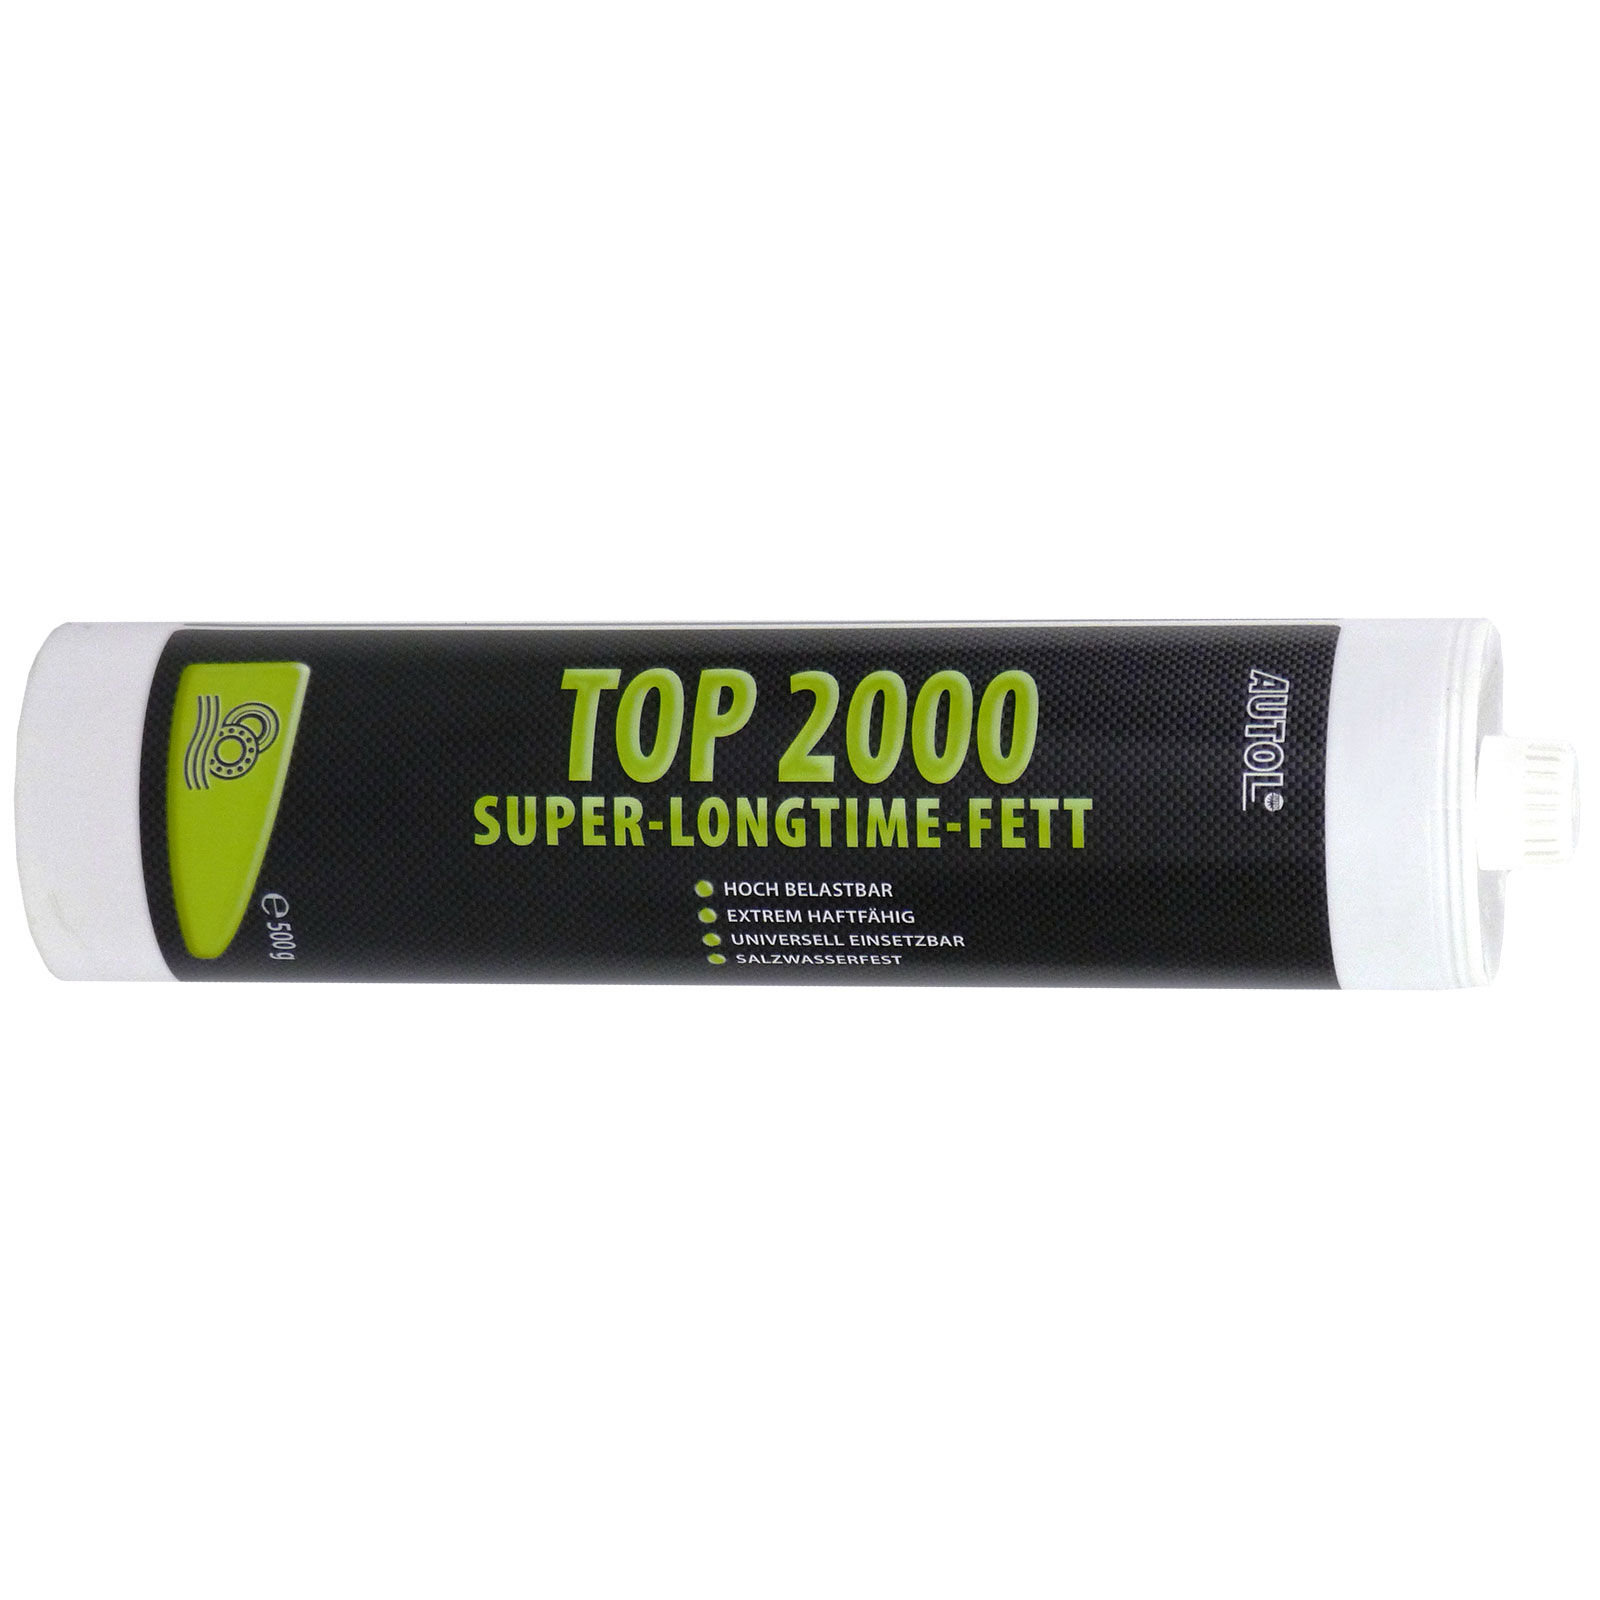 Spezialfett AUTOL TOP 2000 Super-Longtime-Fett - 500 g